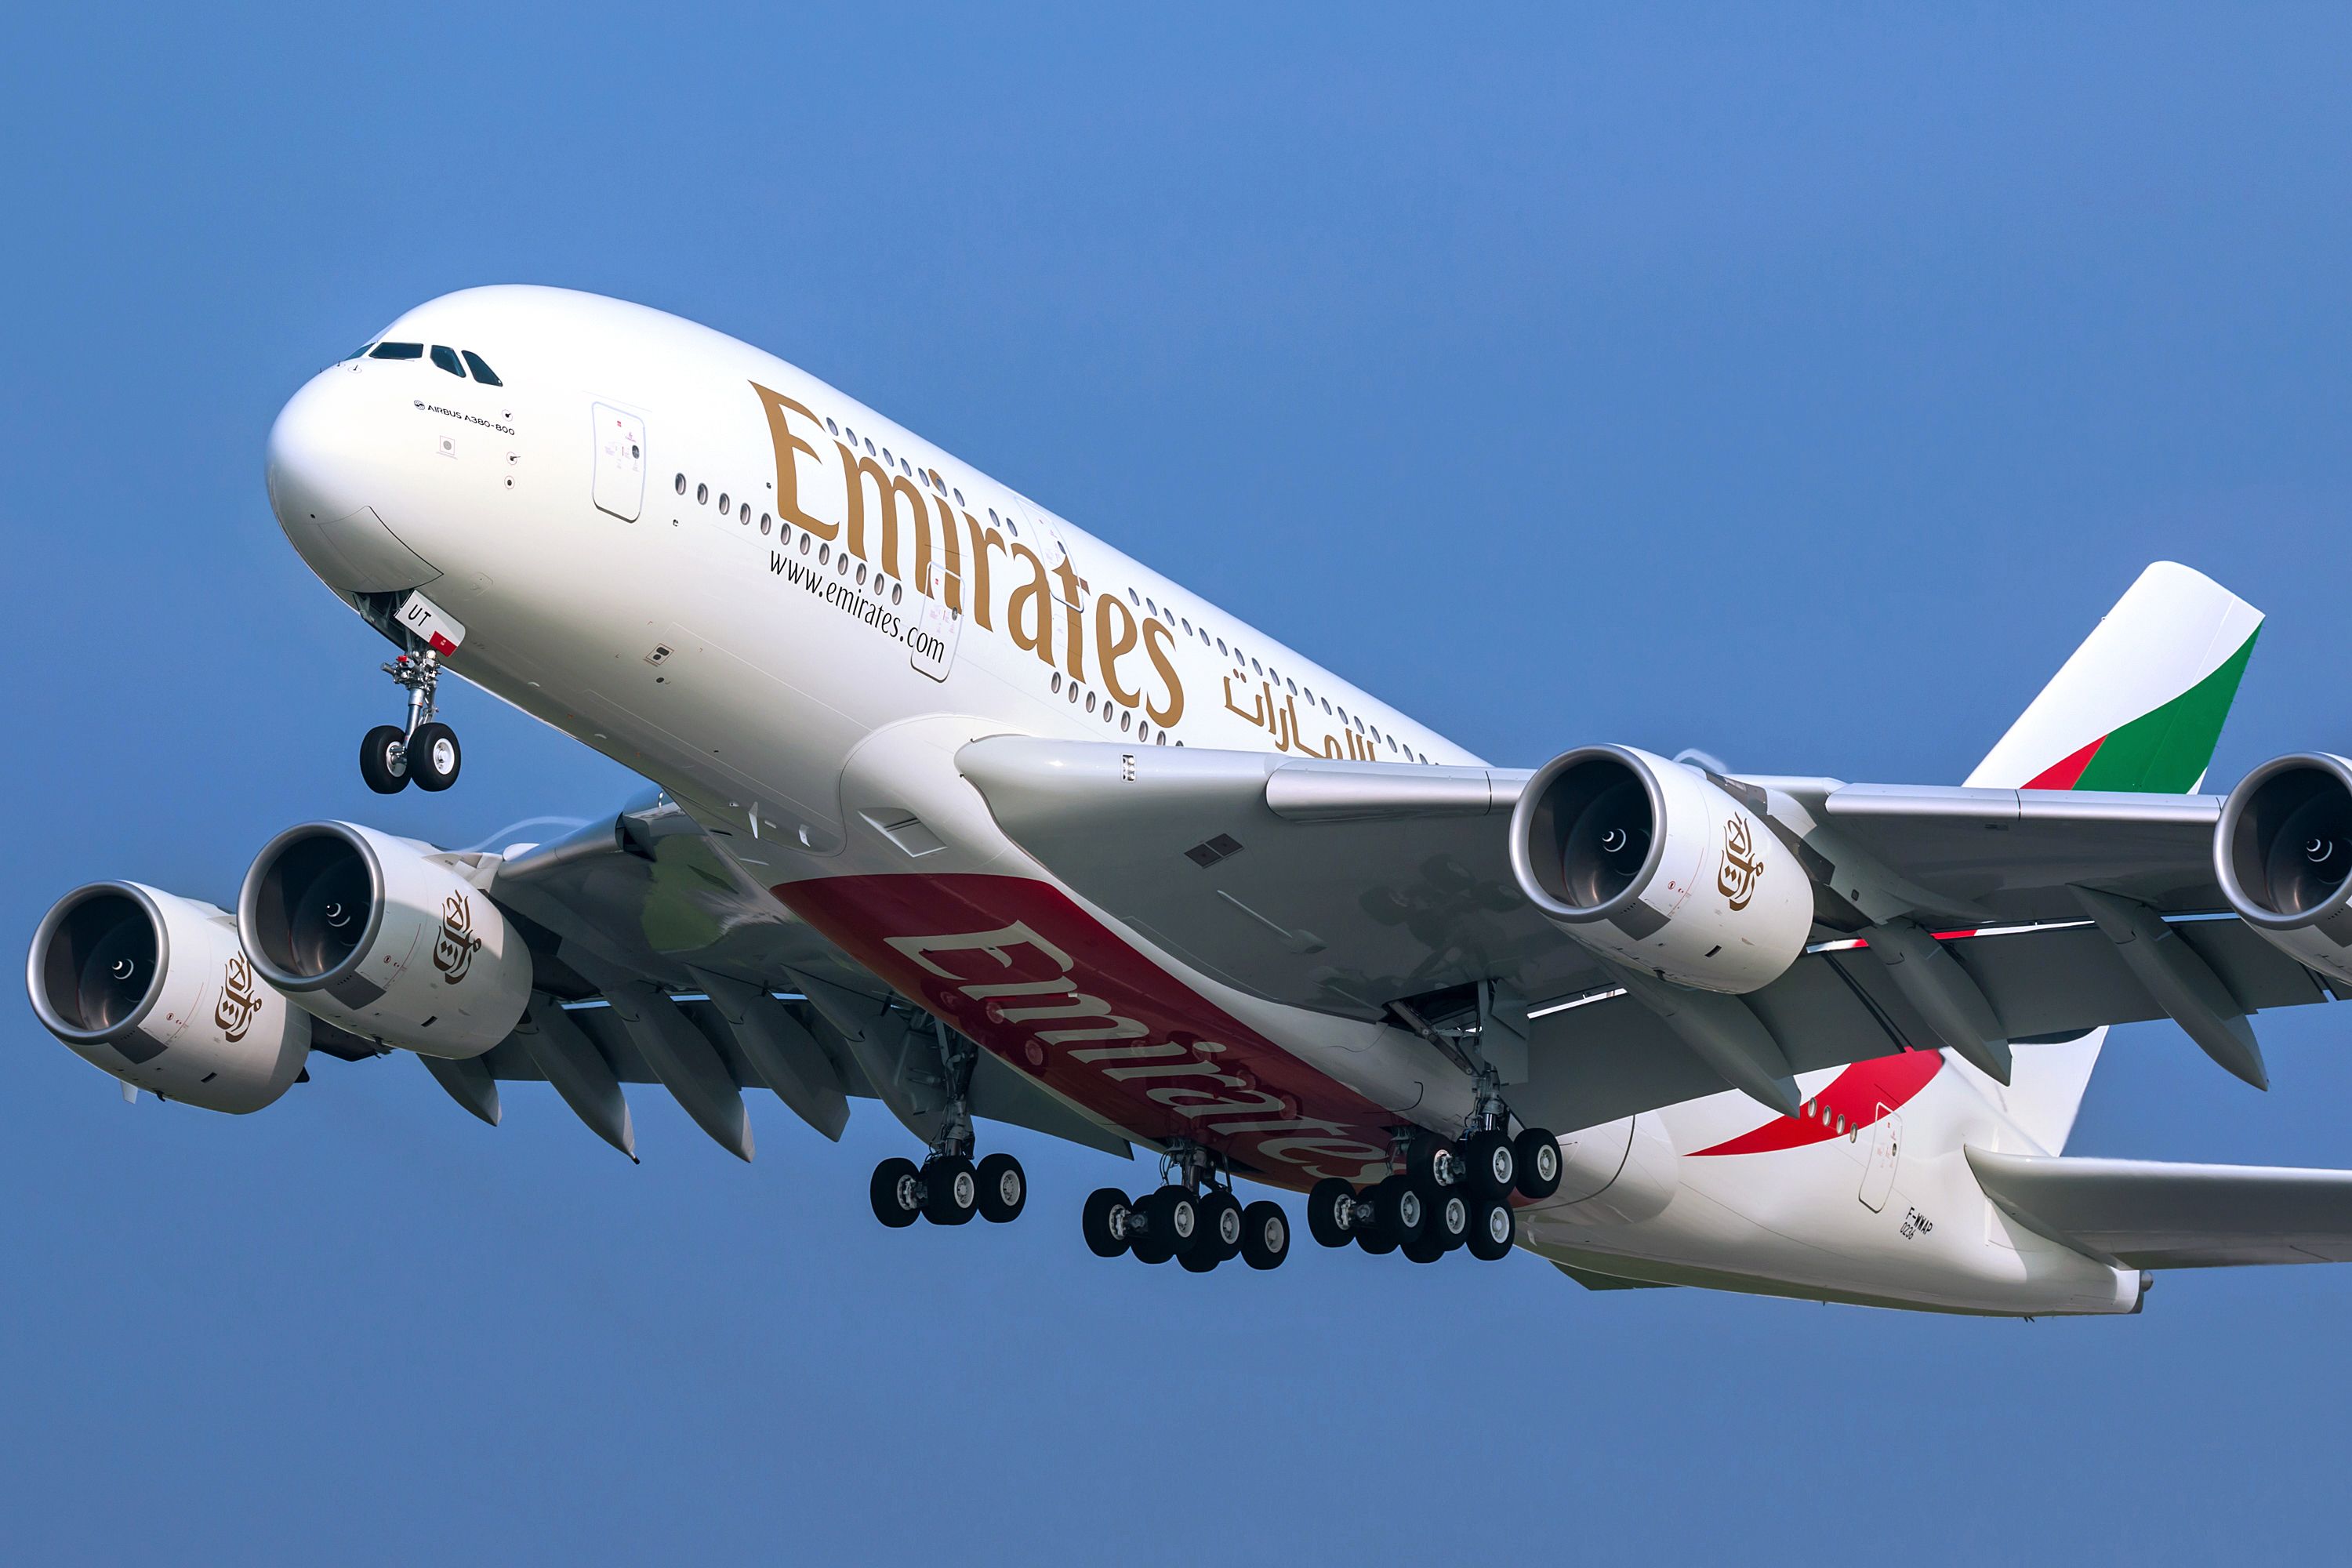 An Emirates-branded Airbus passenger plane